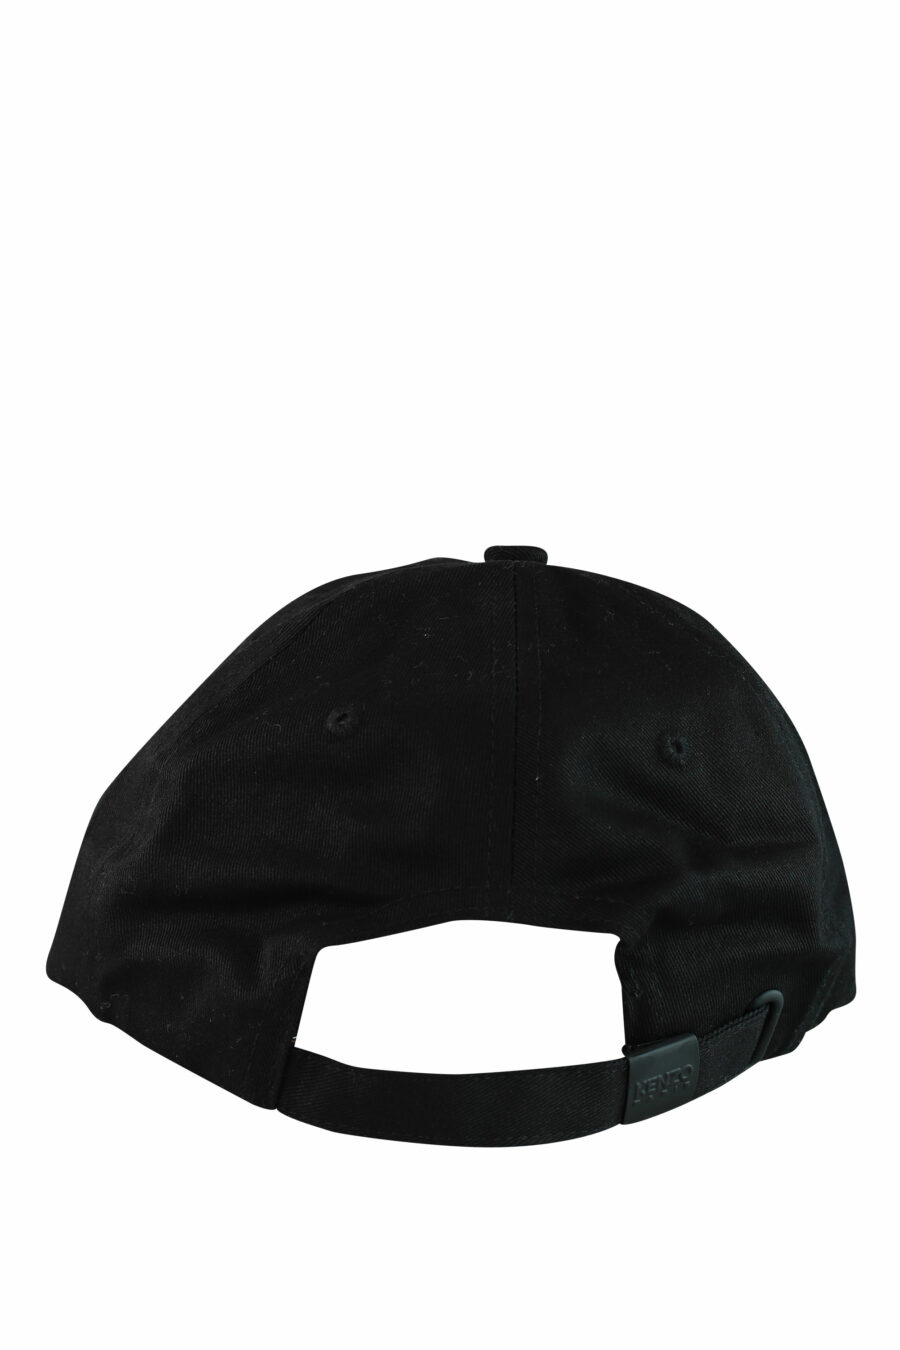 Gorra negra con logo "paris" - IMG 1050